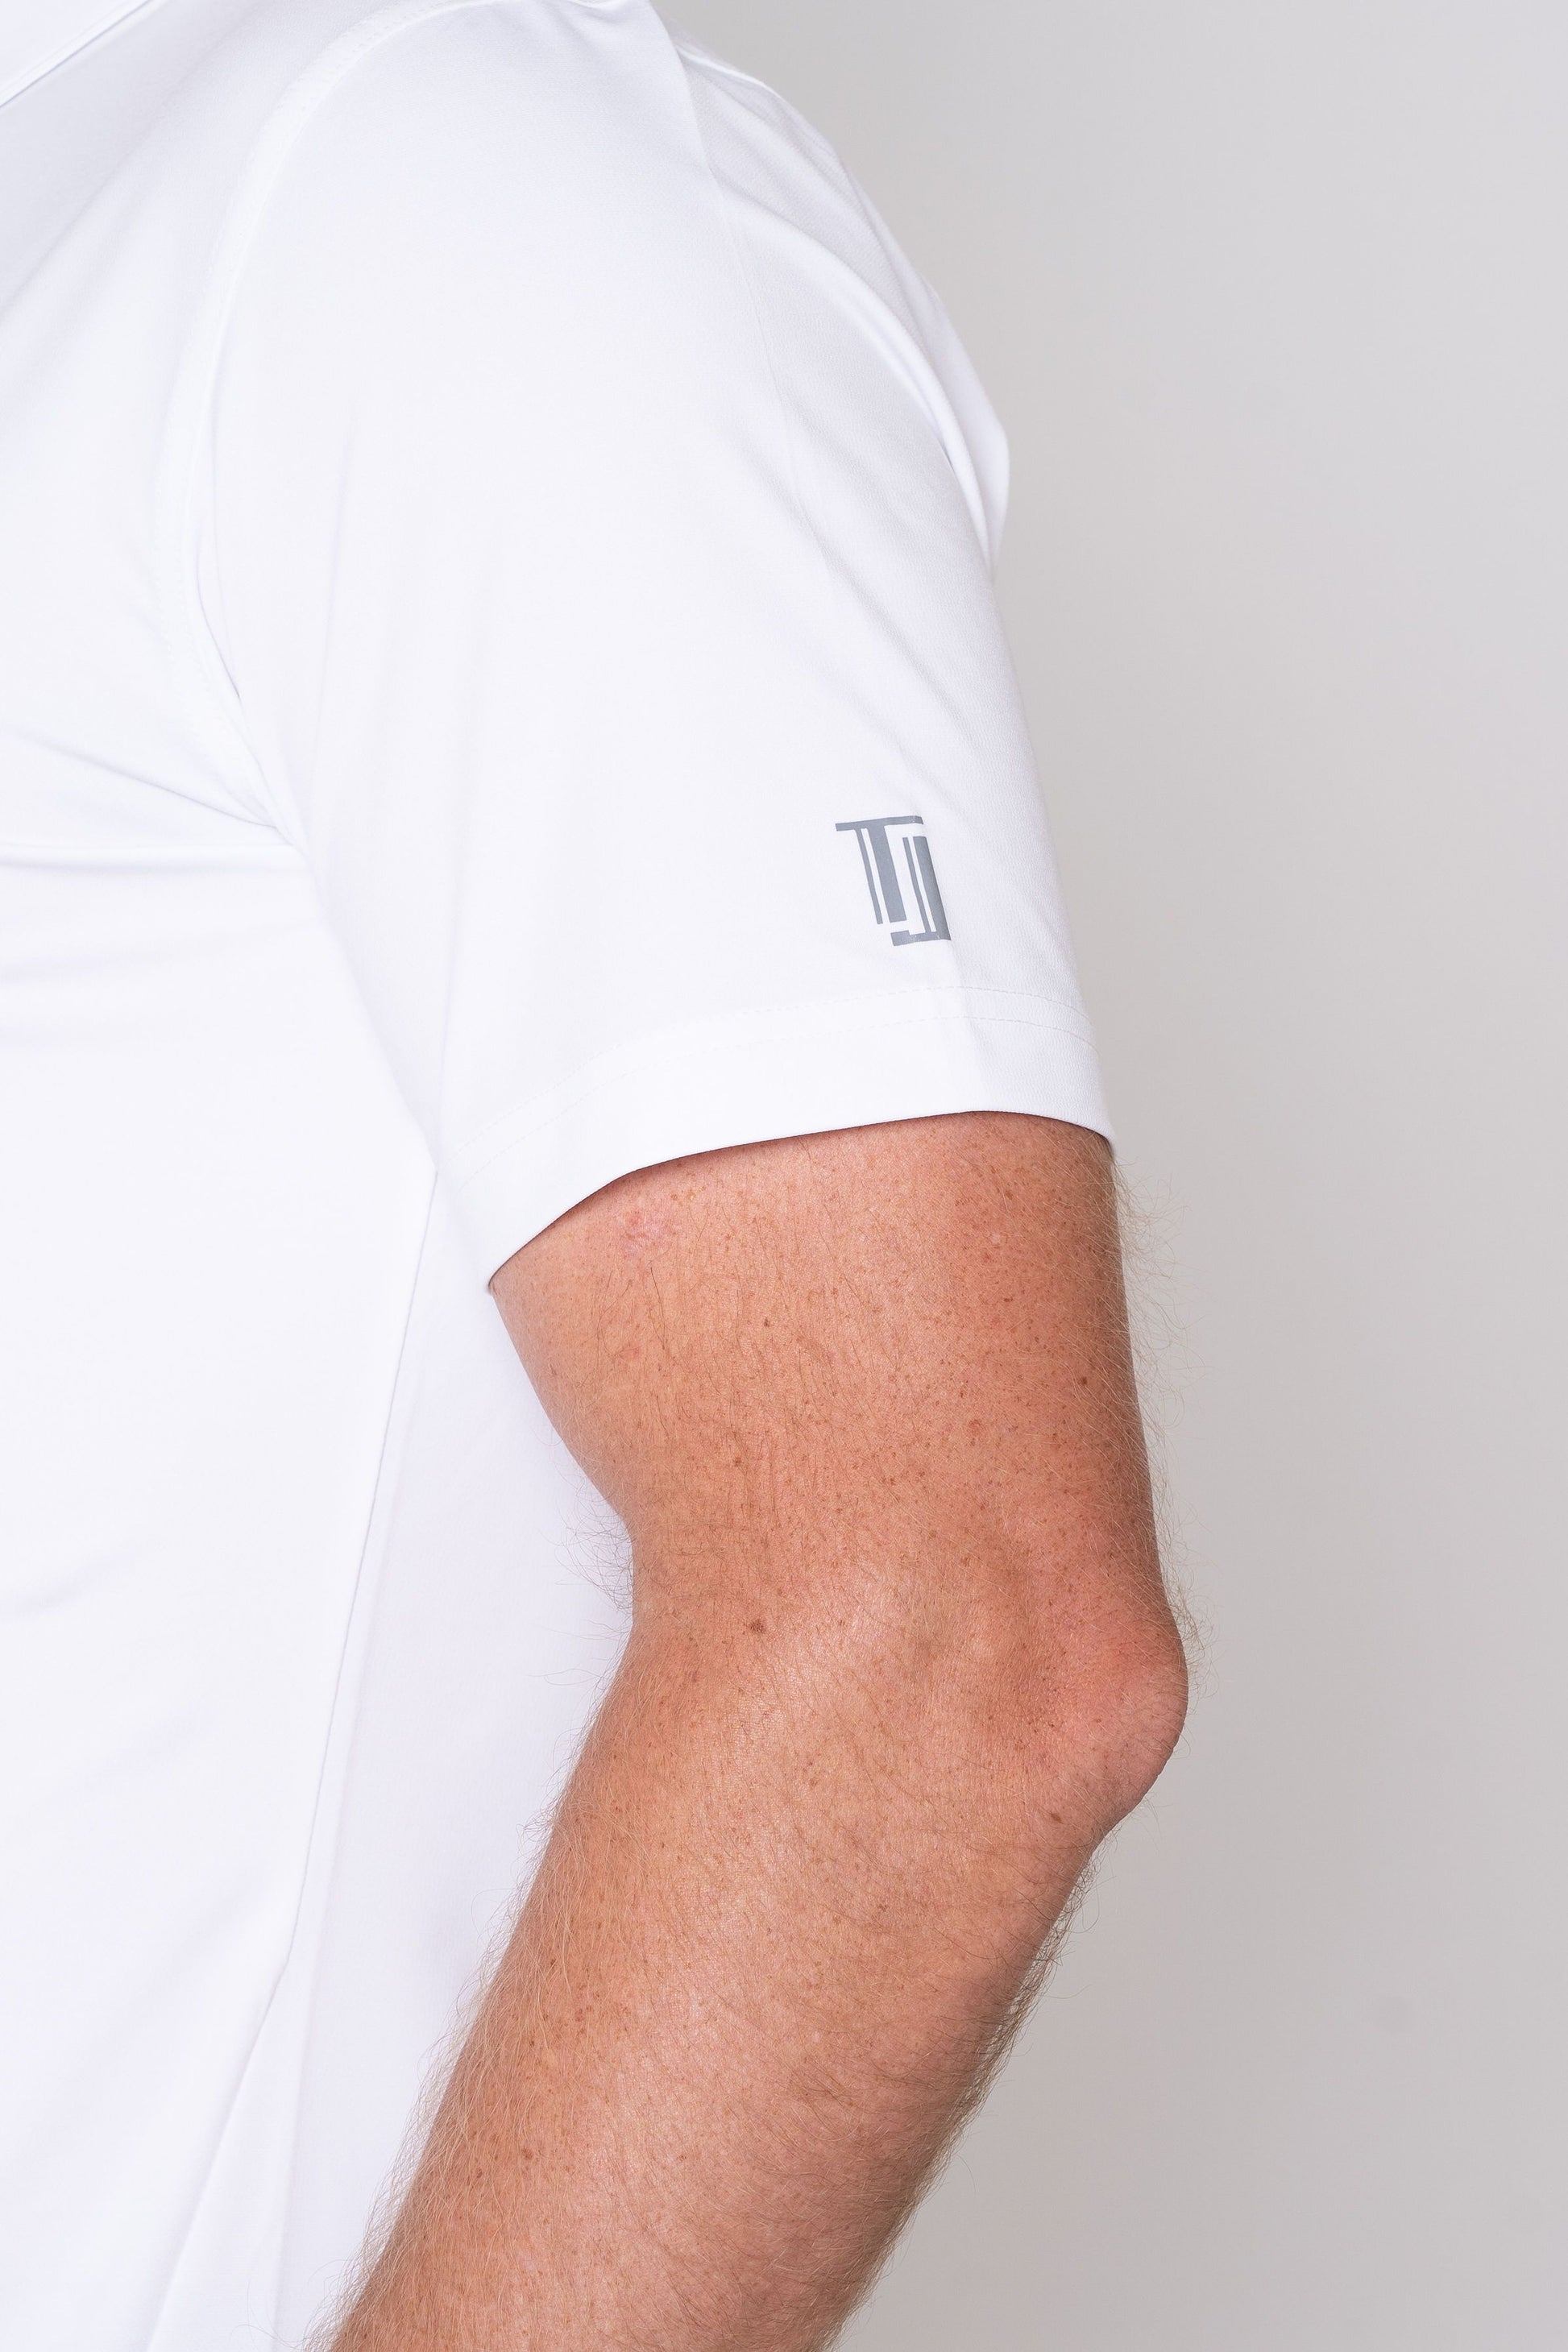 TJ Golf Shirt 2.0 - White Men's Golf Shirt Taylor Jordan Apparel 